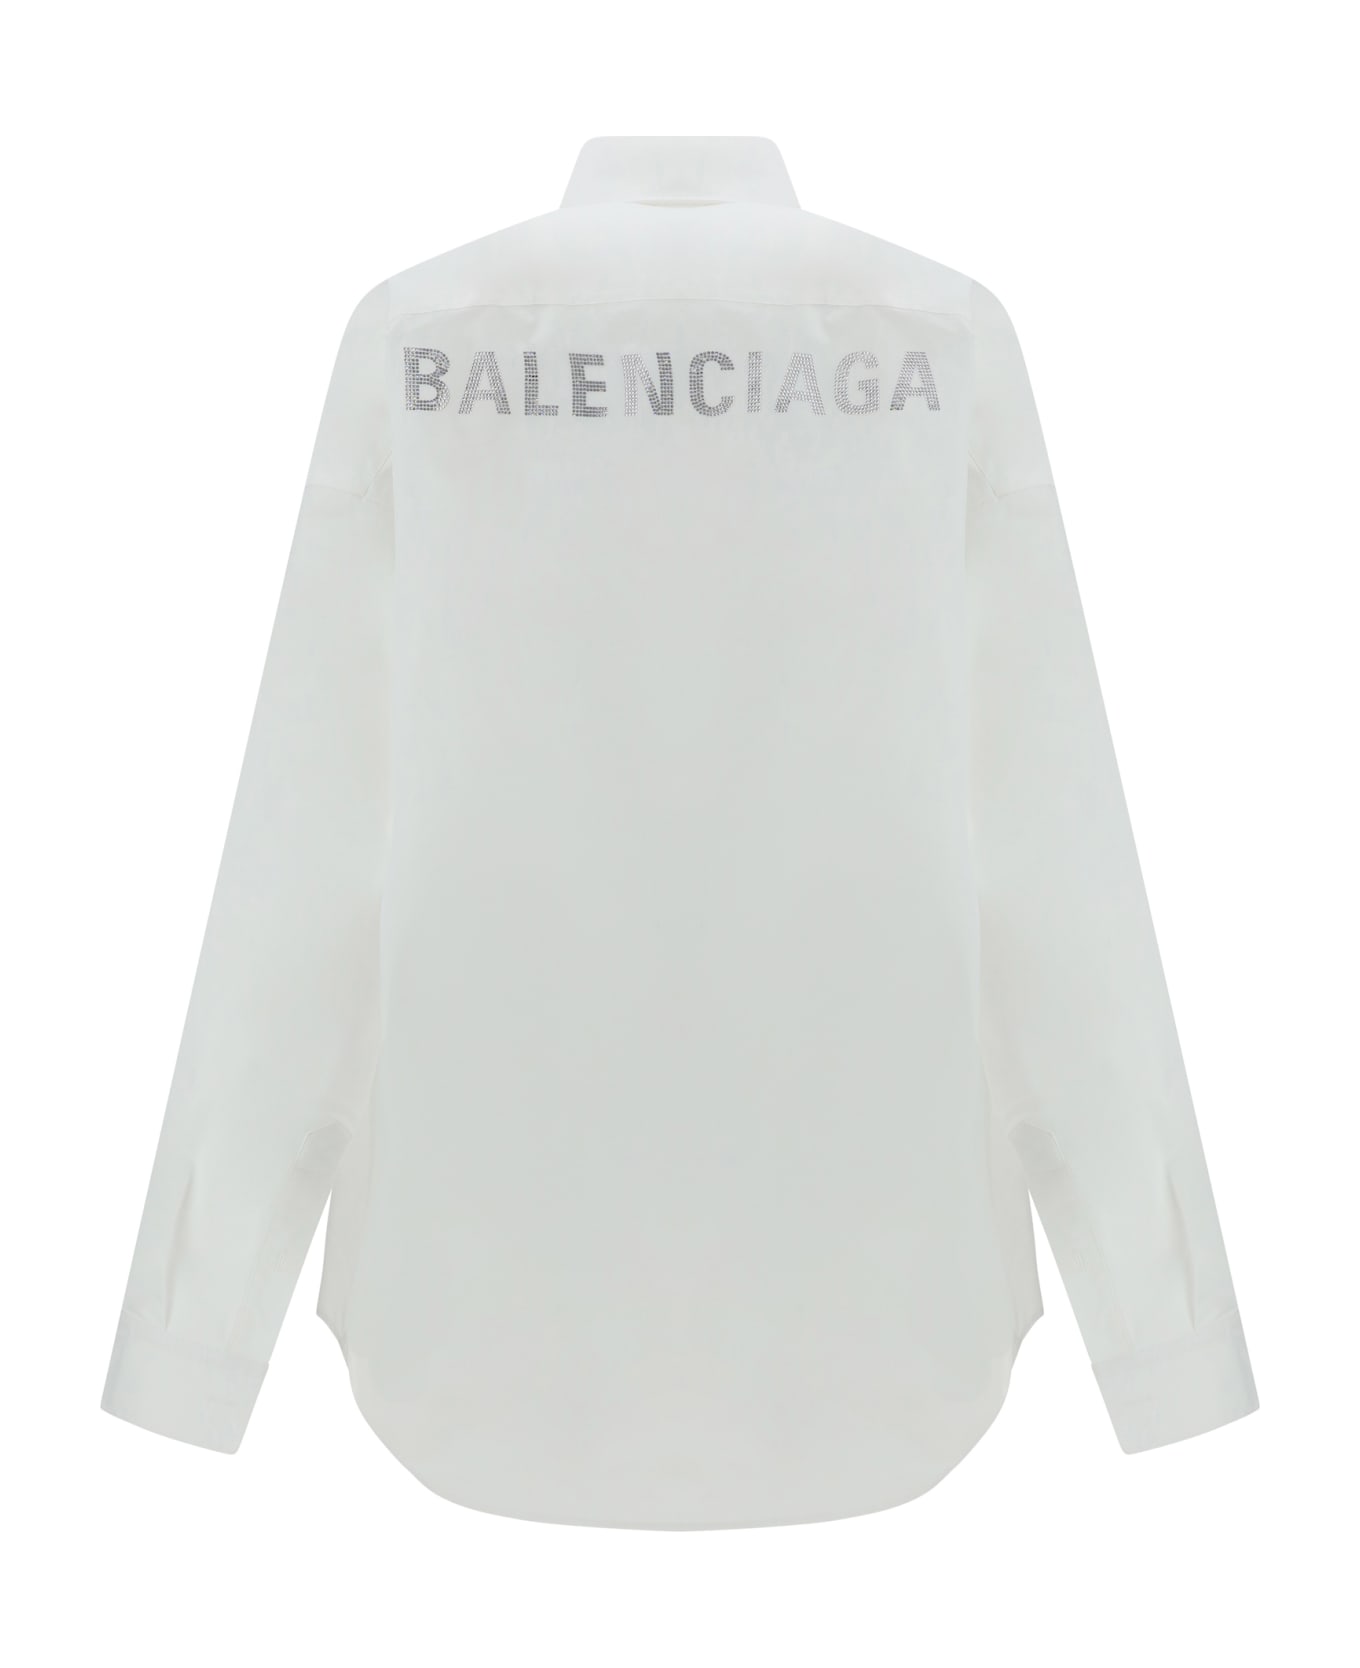 Balenciaga Shirt - White シャツ